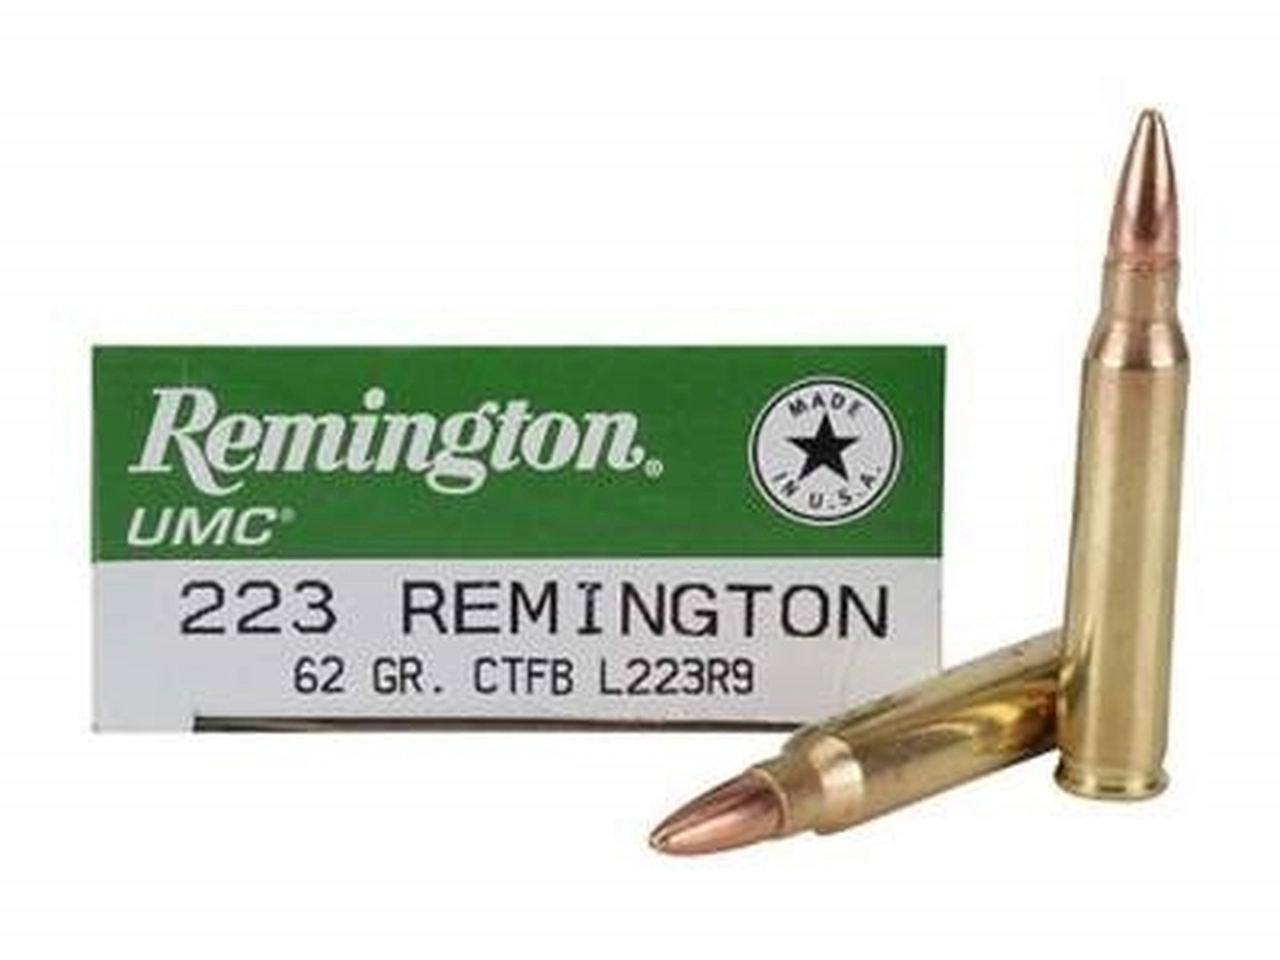 UMC .223 Rem CTFB - 200 ROUNDS
Remington